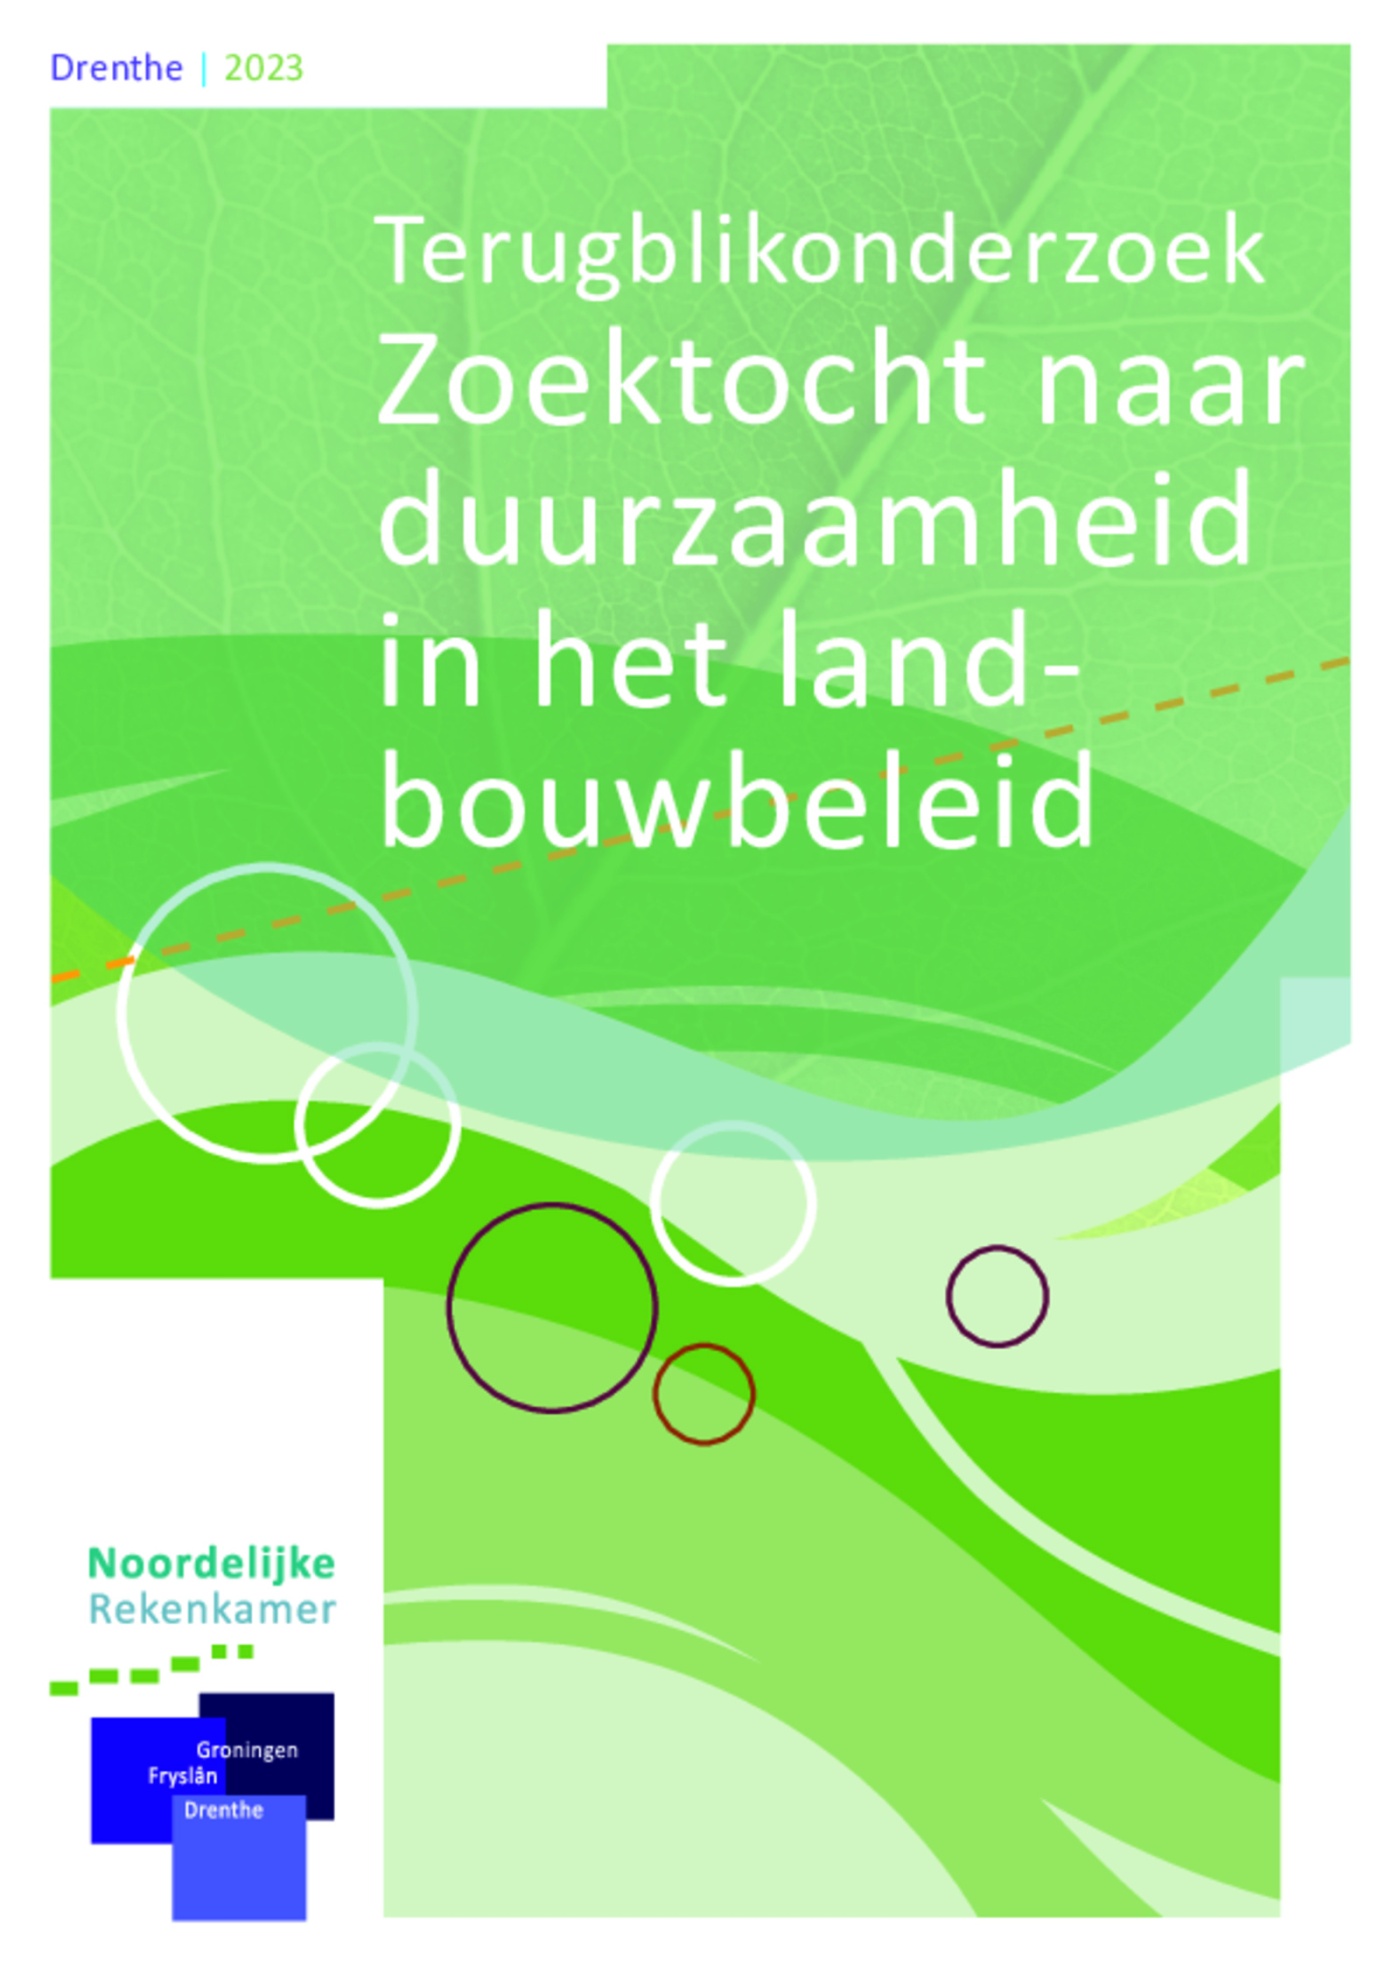 20230710-TerugblikDL-Eindrapport Drenthe-def.pdf